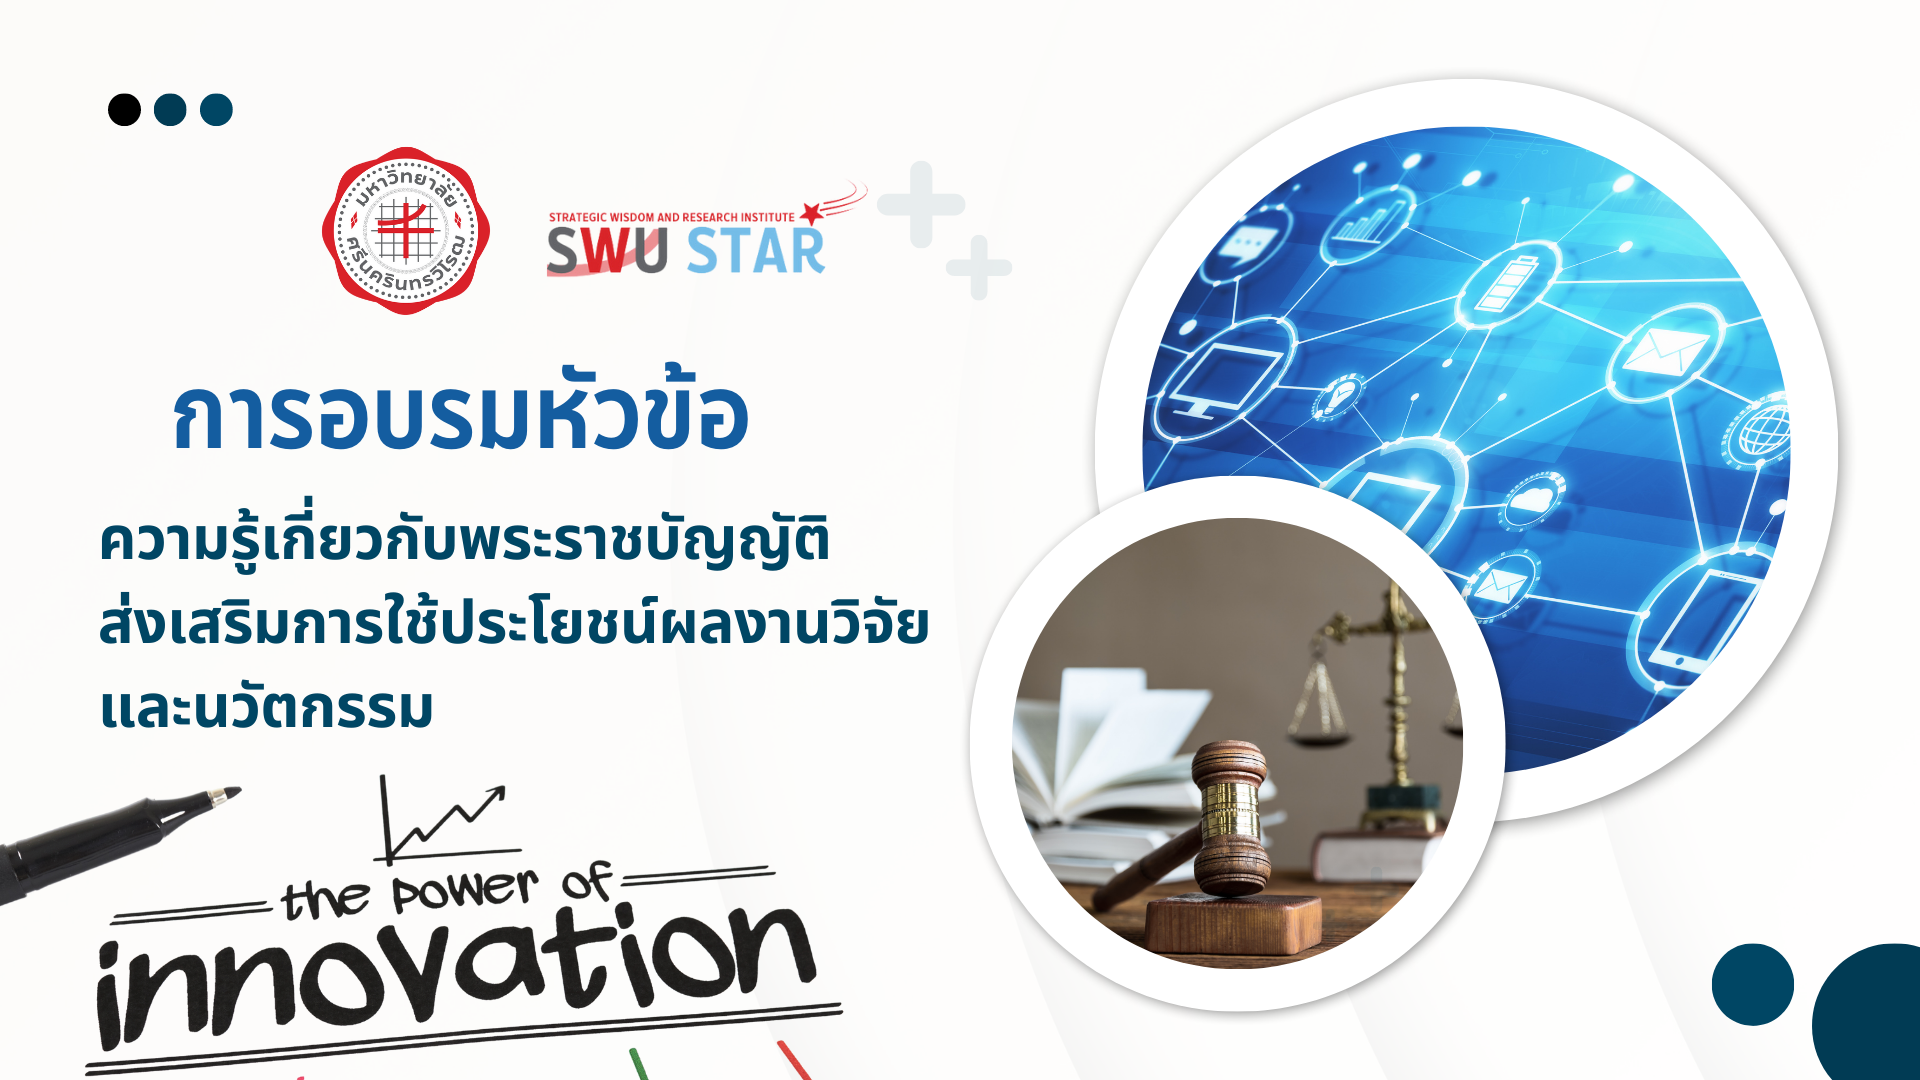 SWU STAR: ความรู้เกี่ยวกับพระราชบัญญัติส่งเสริมการ ใช้ประโยชน์ผลงานวิจัยและ นวัตกรรม